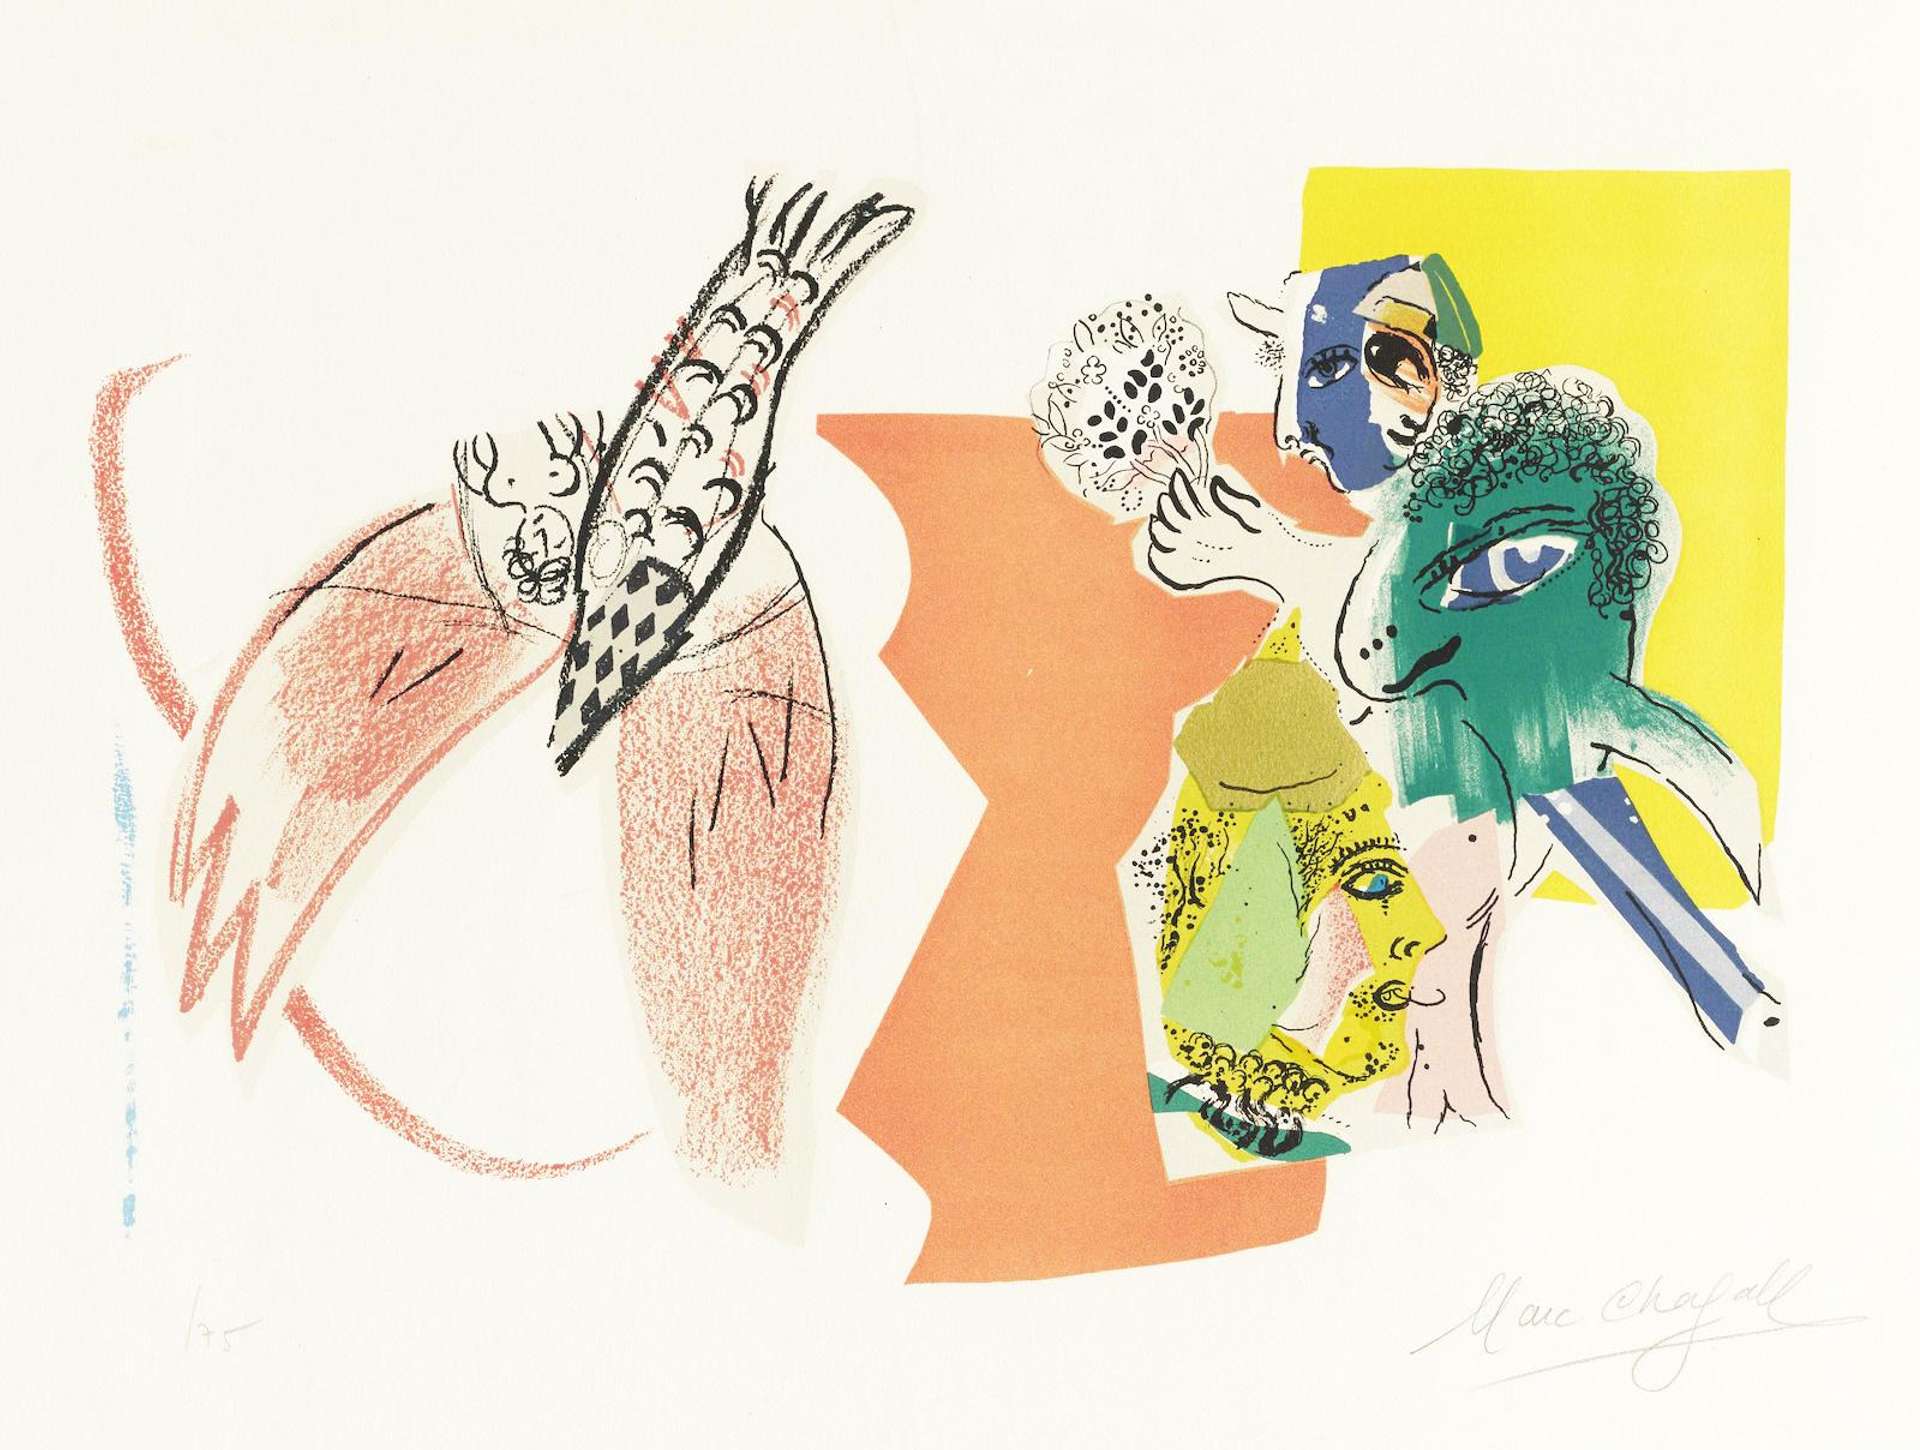 Marc Chagall: Composition Pour XXe Siècle - Signed Print